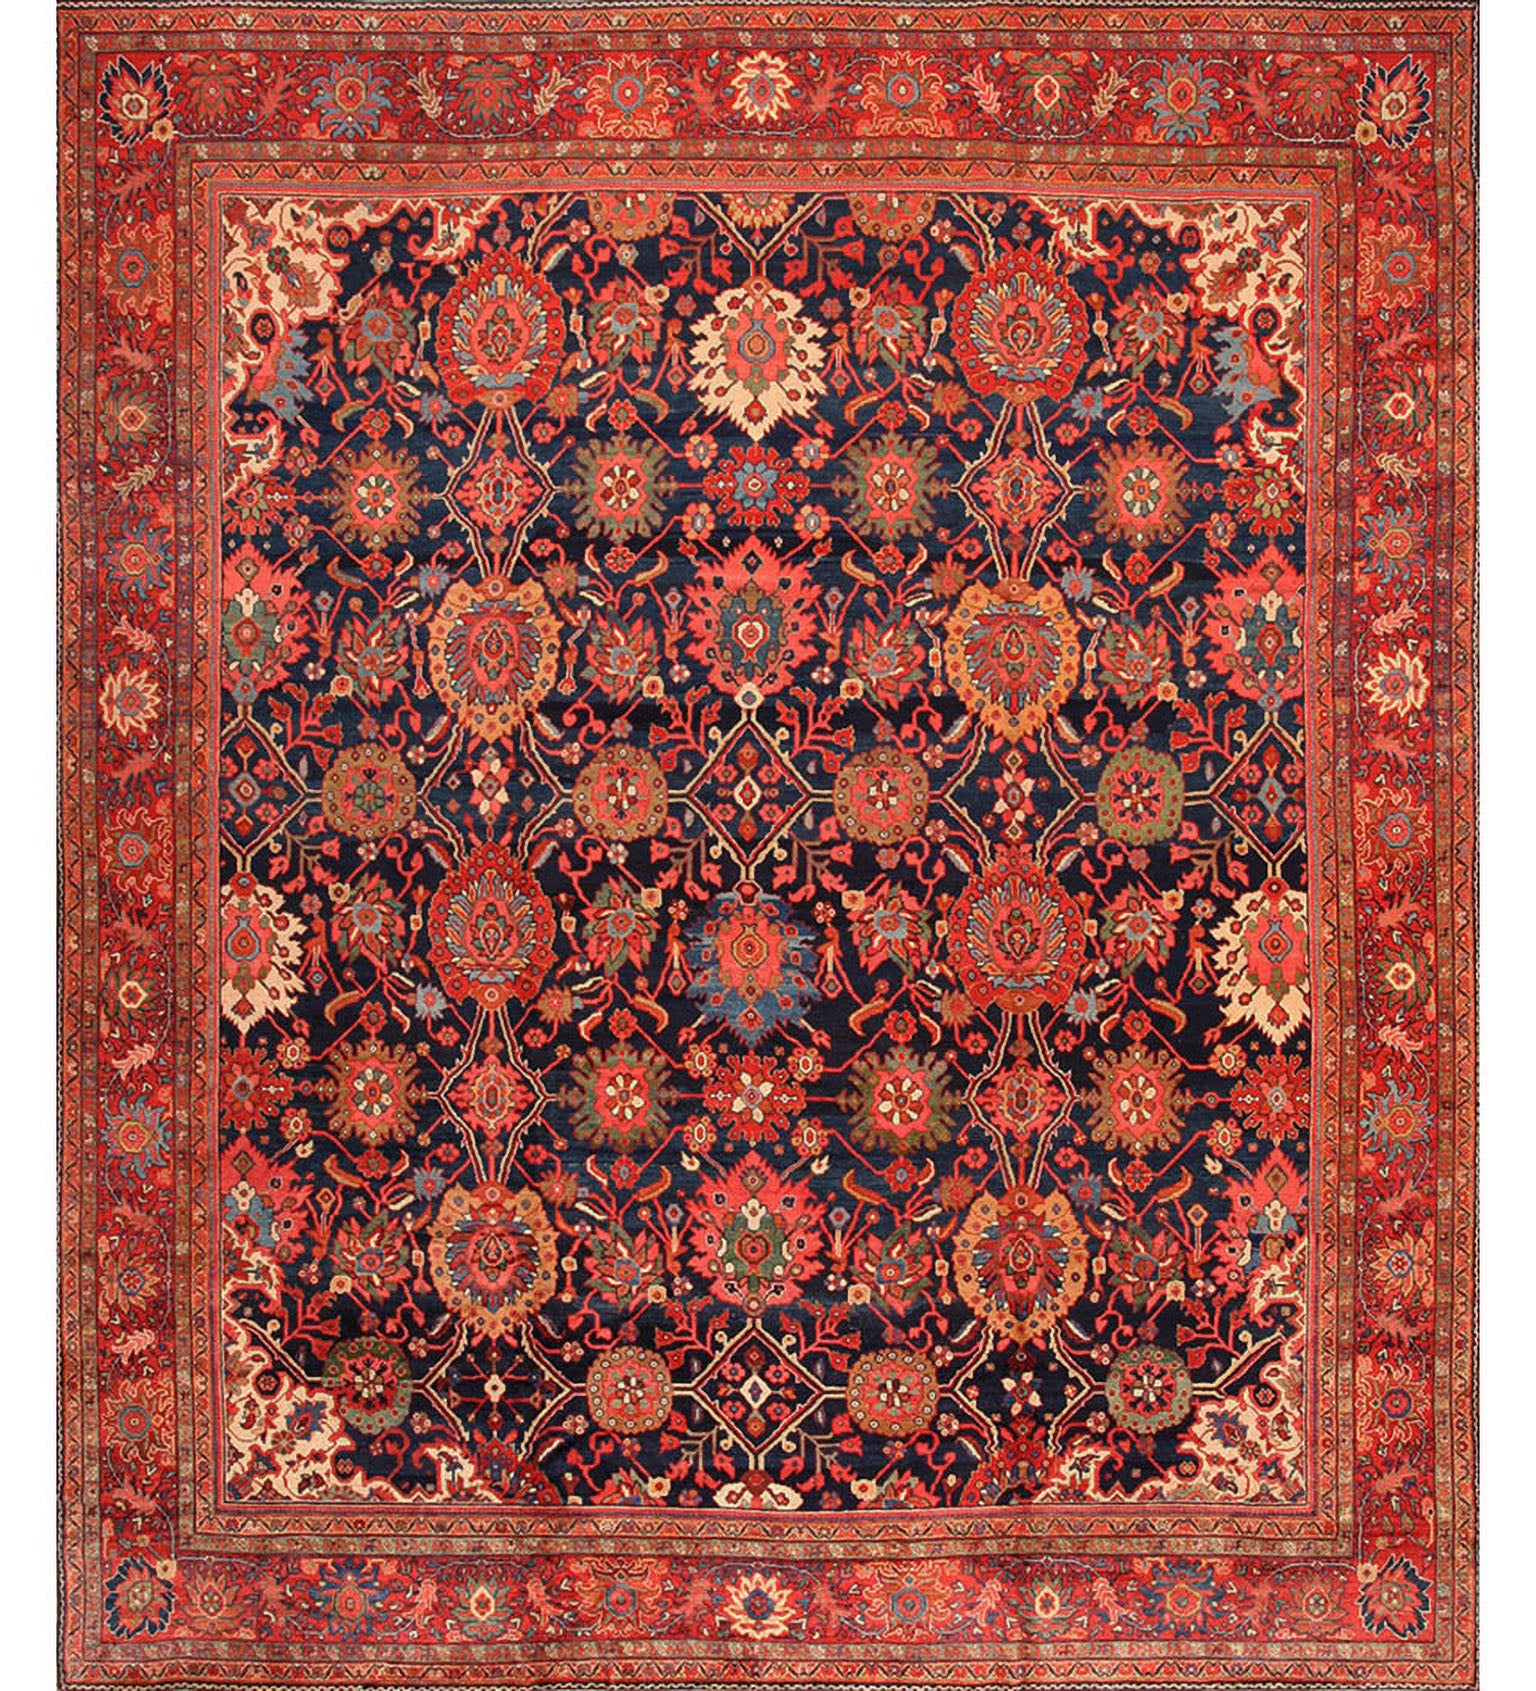 19th Century Persian Ziegler Sultanabad Carpet ( 11'6" x 13'8" - 351 x 417 ) For Sale